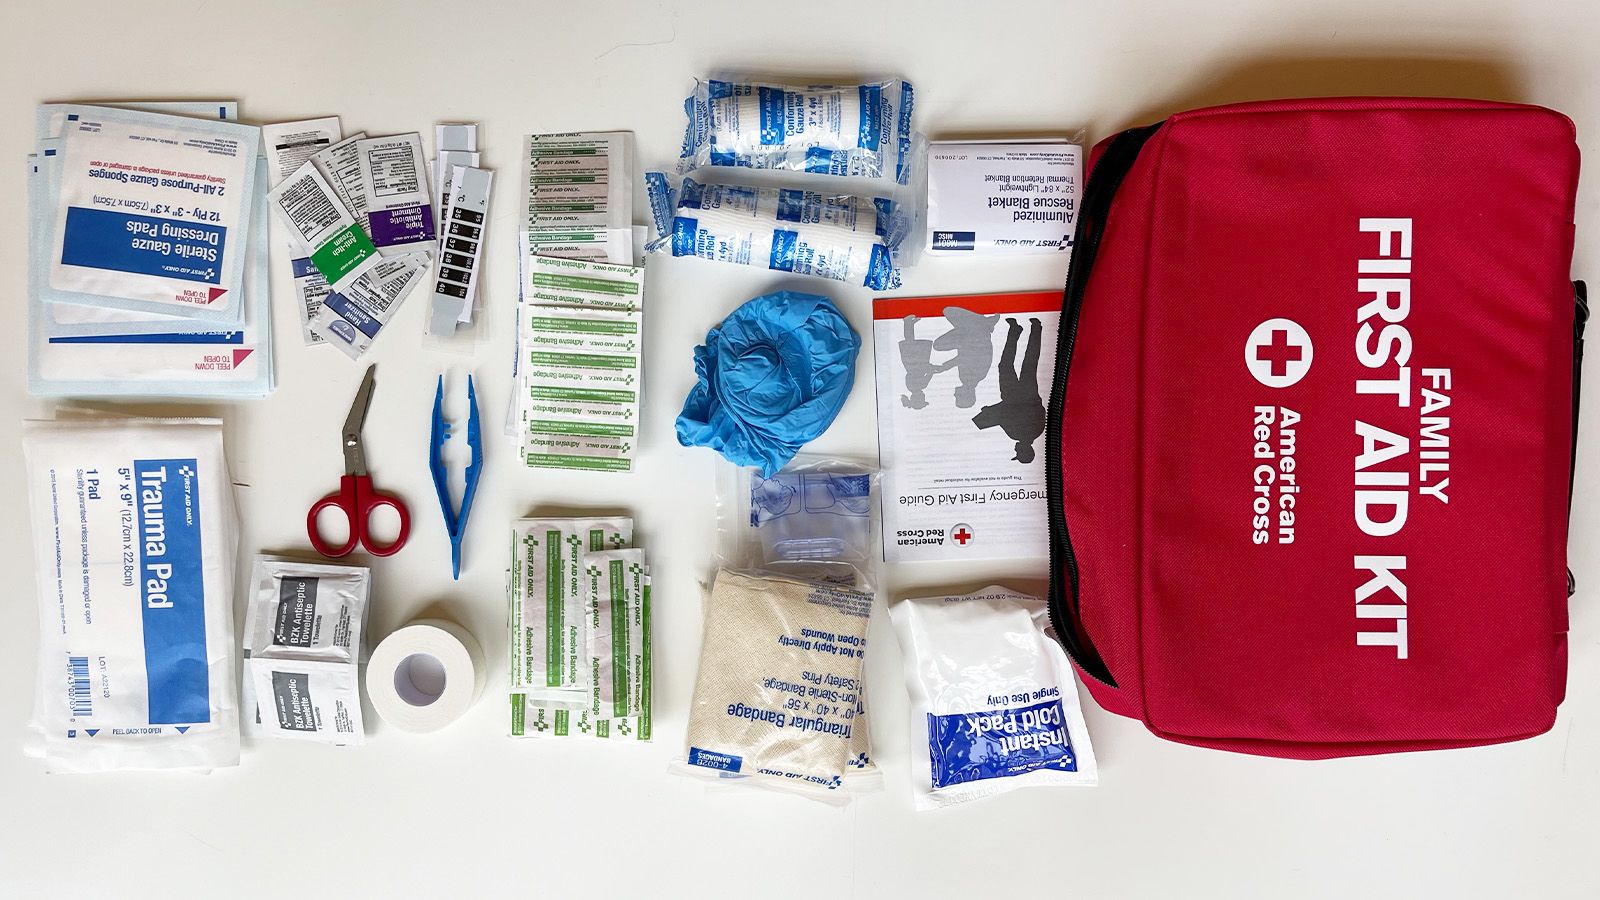 Medicine Organizer And Storage Bag Empty, Family First Aid Box